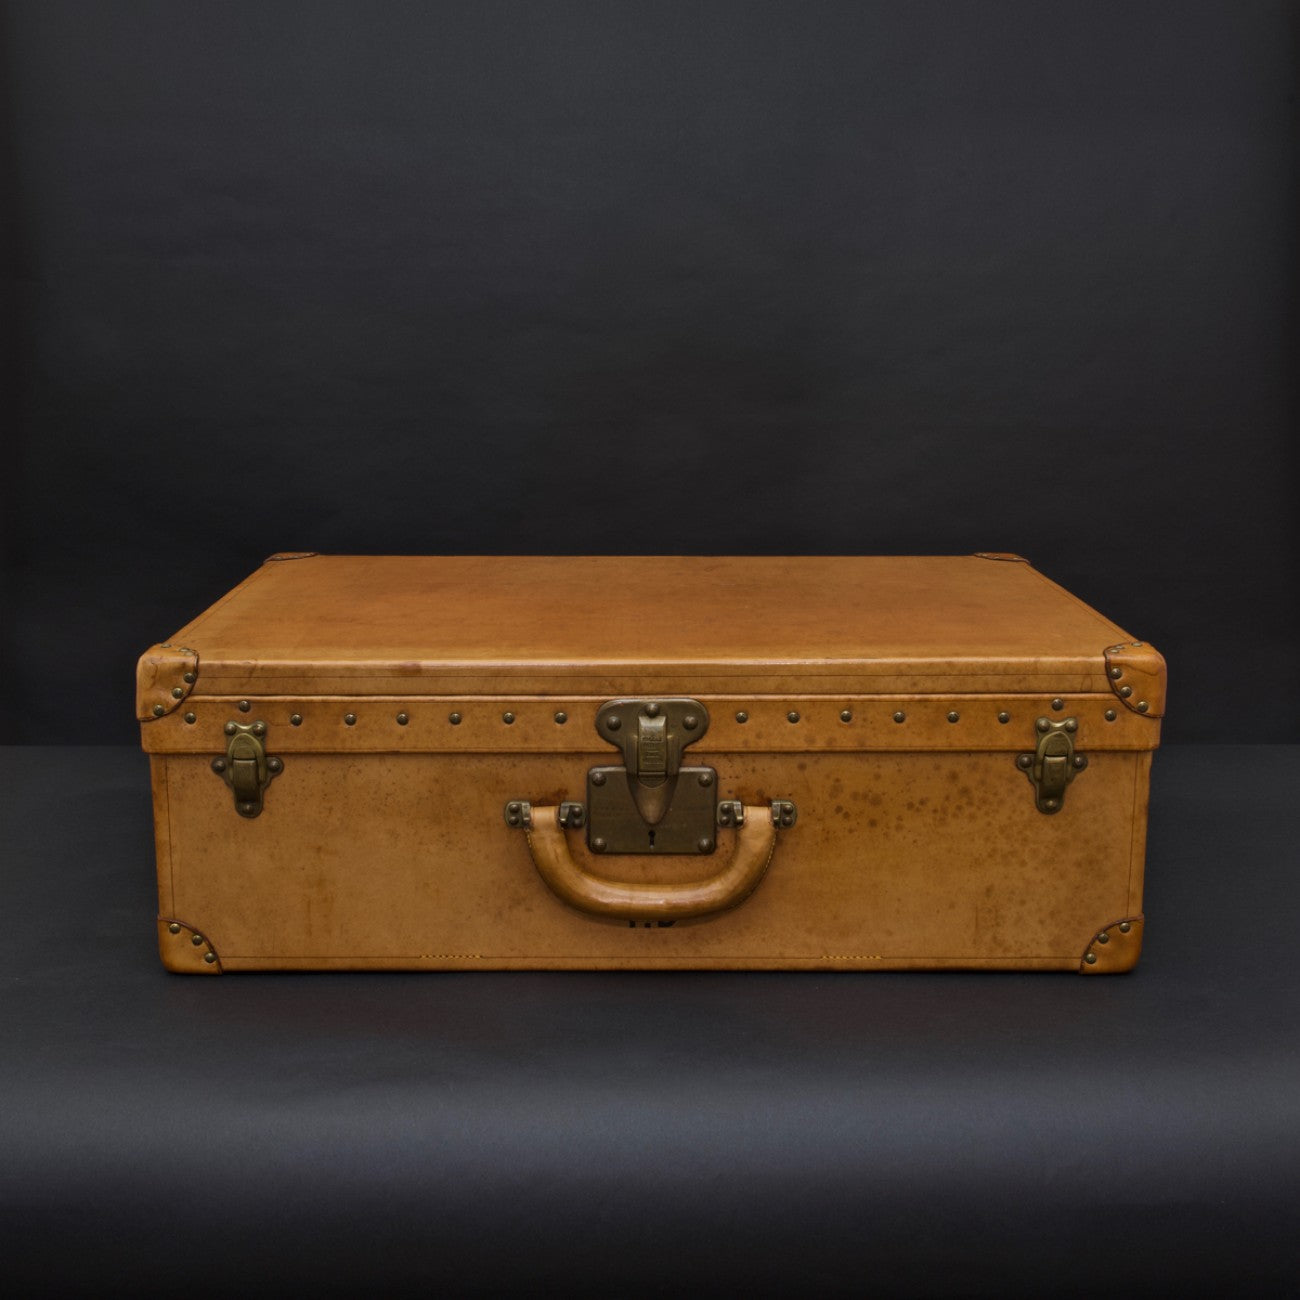 Louis Vuitton 'Vache Naturelle' Tan Leather Suitcase, circa 1935